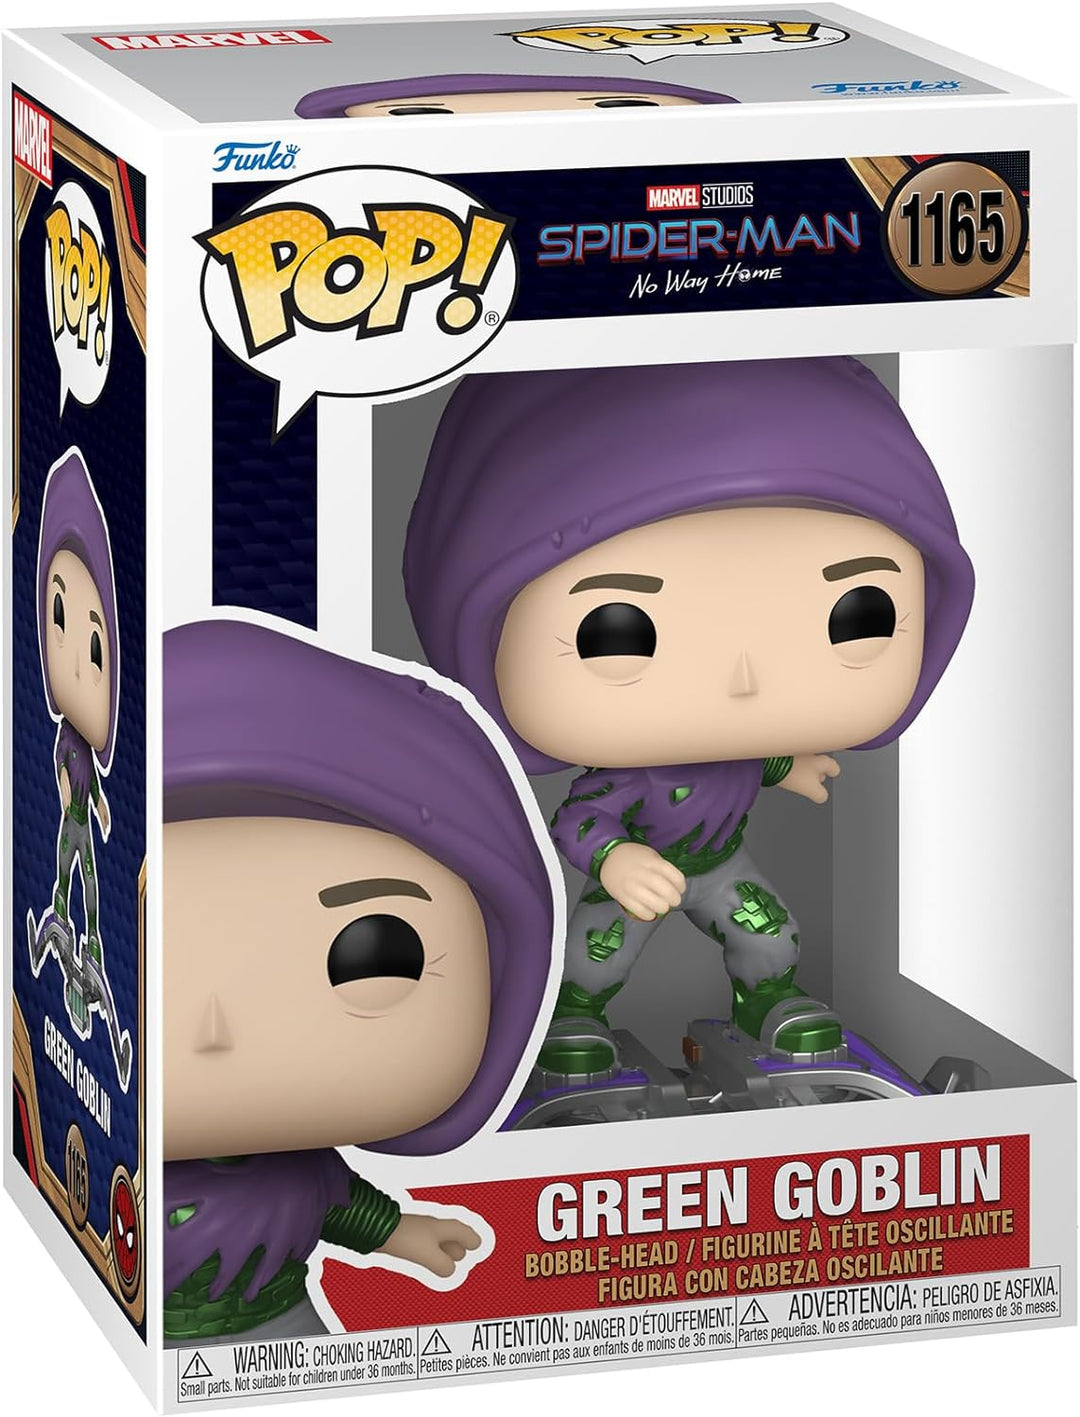 Green Goblin Marvel Spiderman No Way Home Funko POP! Vinyl Figure